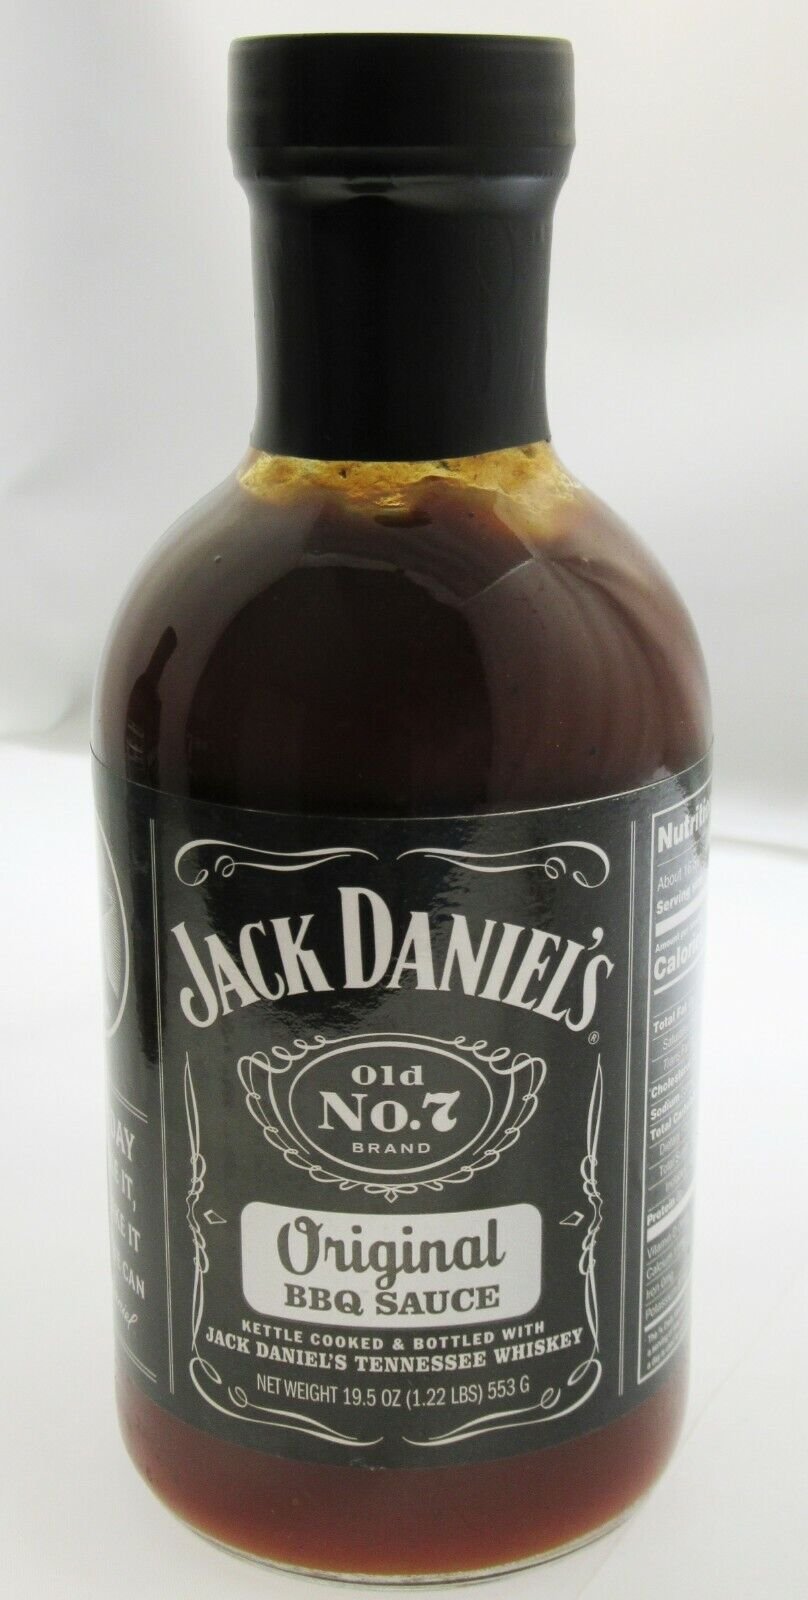 Jack Daniel's ~ Old No. 7 Brand Original 19.5oz - BBQ Barbeque Sauce